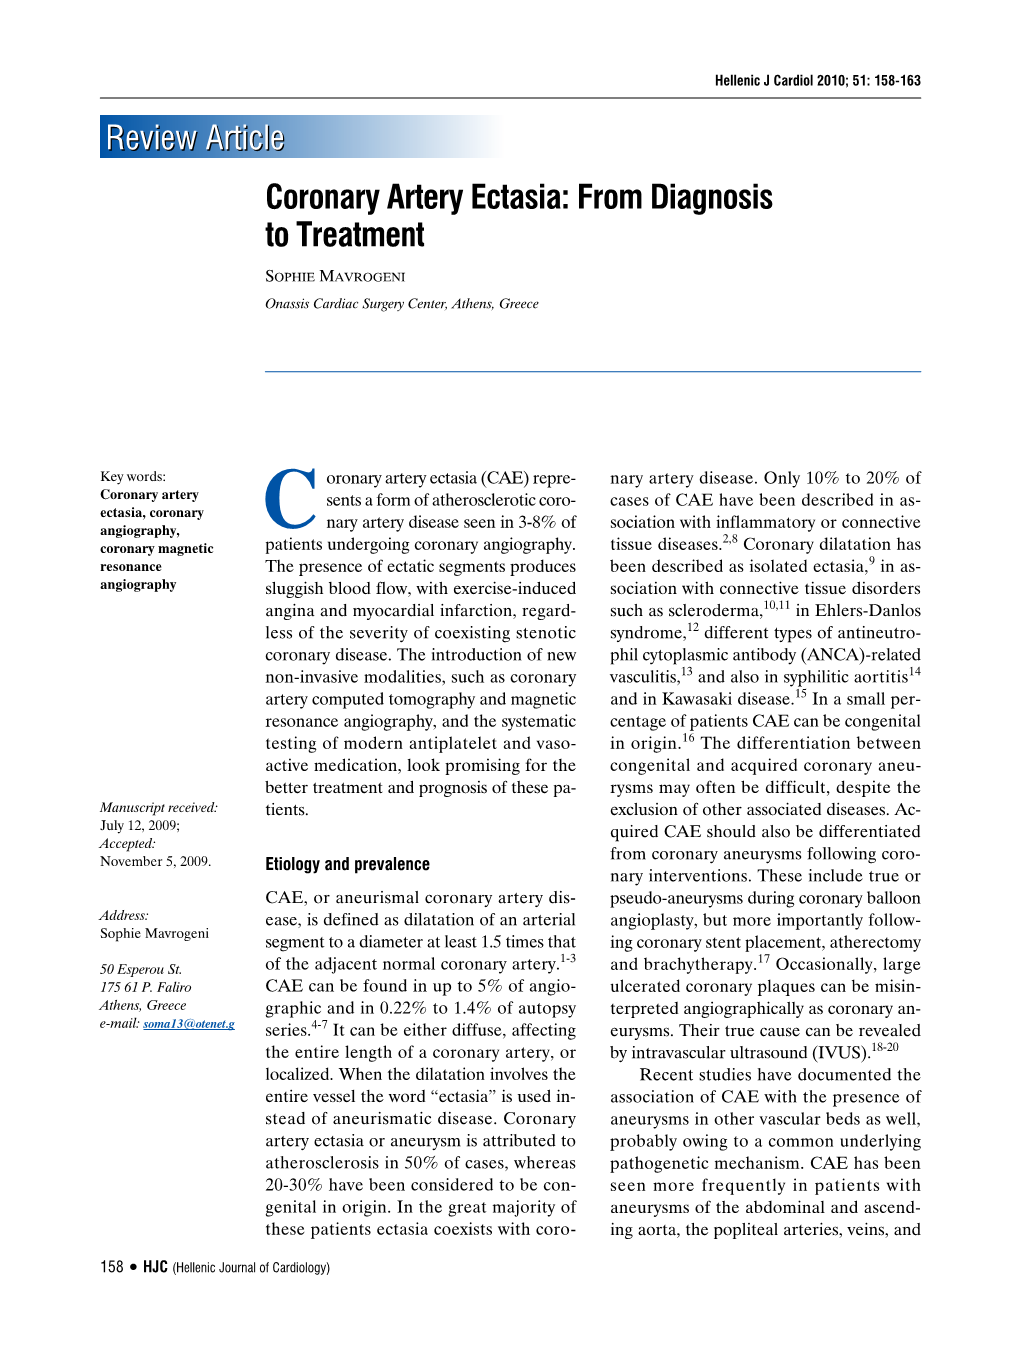 Coronary Artery Ectasia: from Diagnosis to Treatment